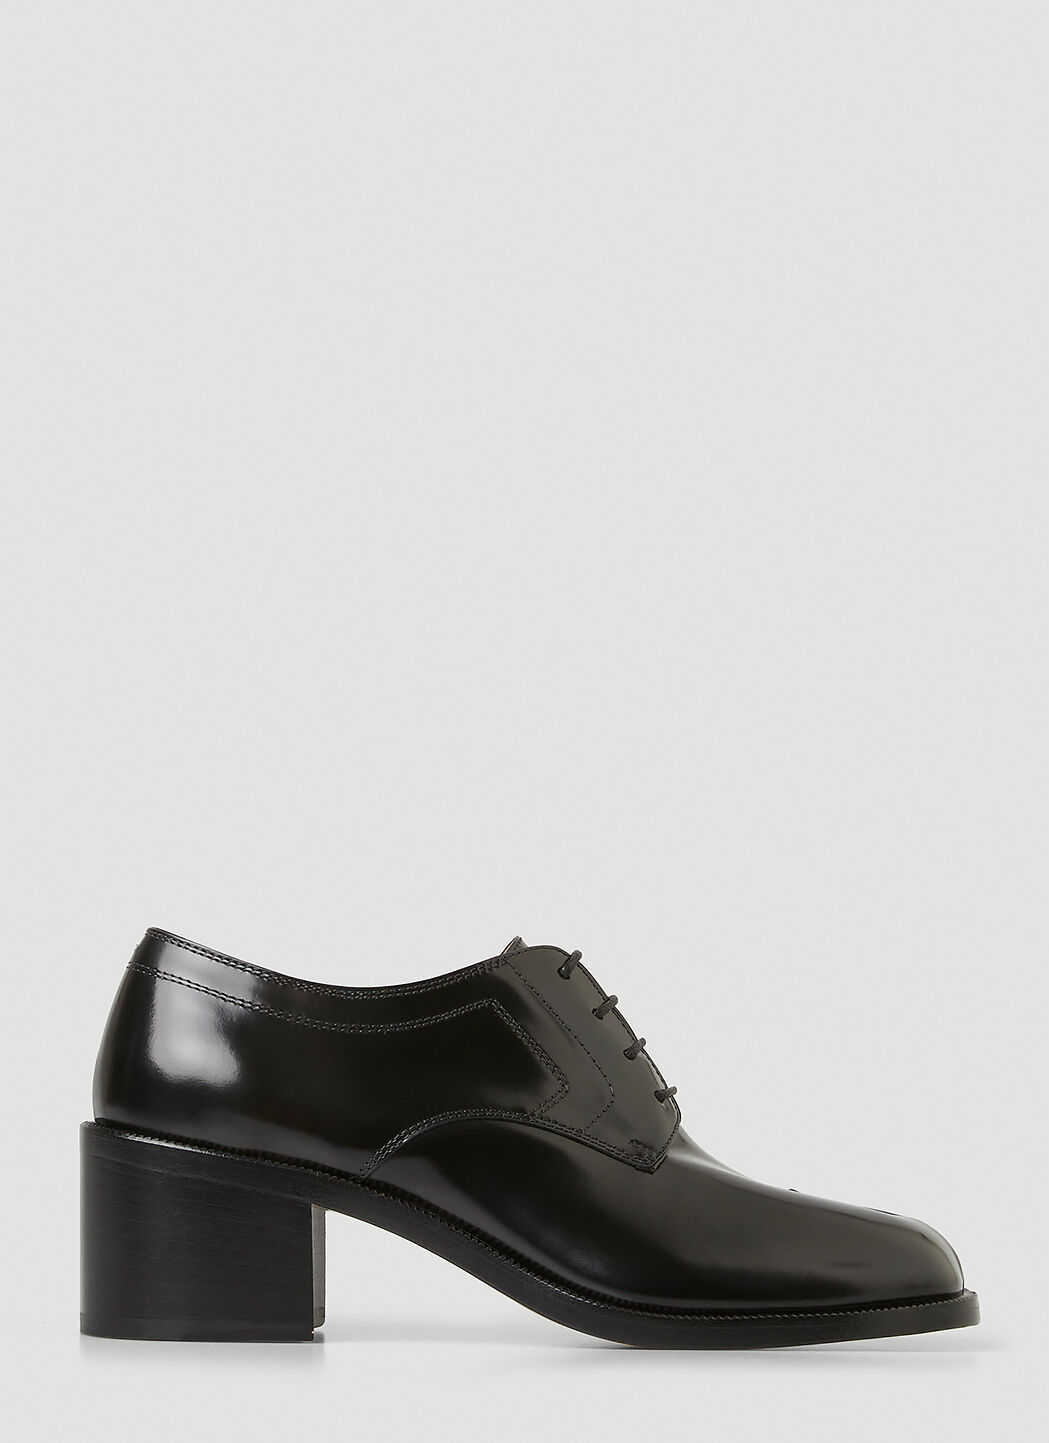 Vivienne Westwood Tabi Lace-Up Heeled Shoes Black vvw0255059